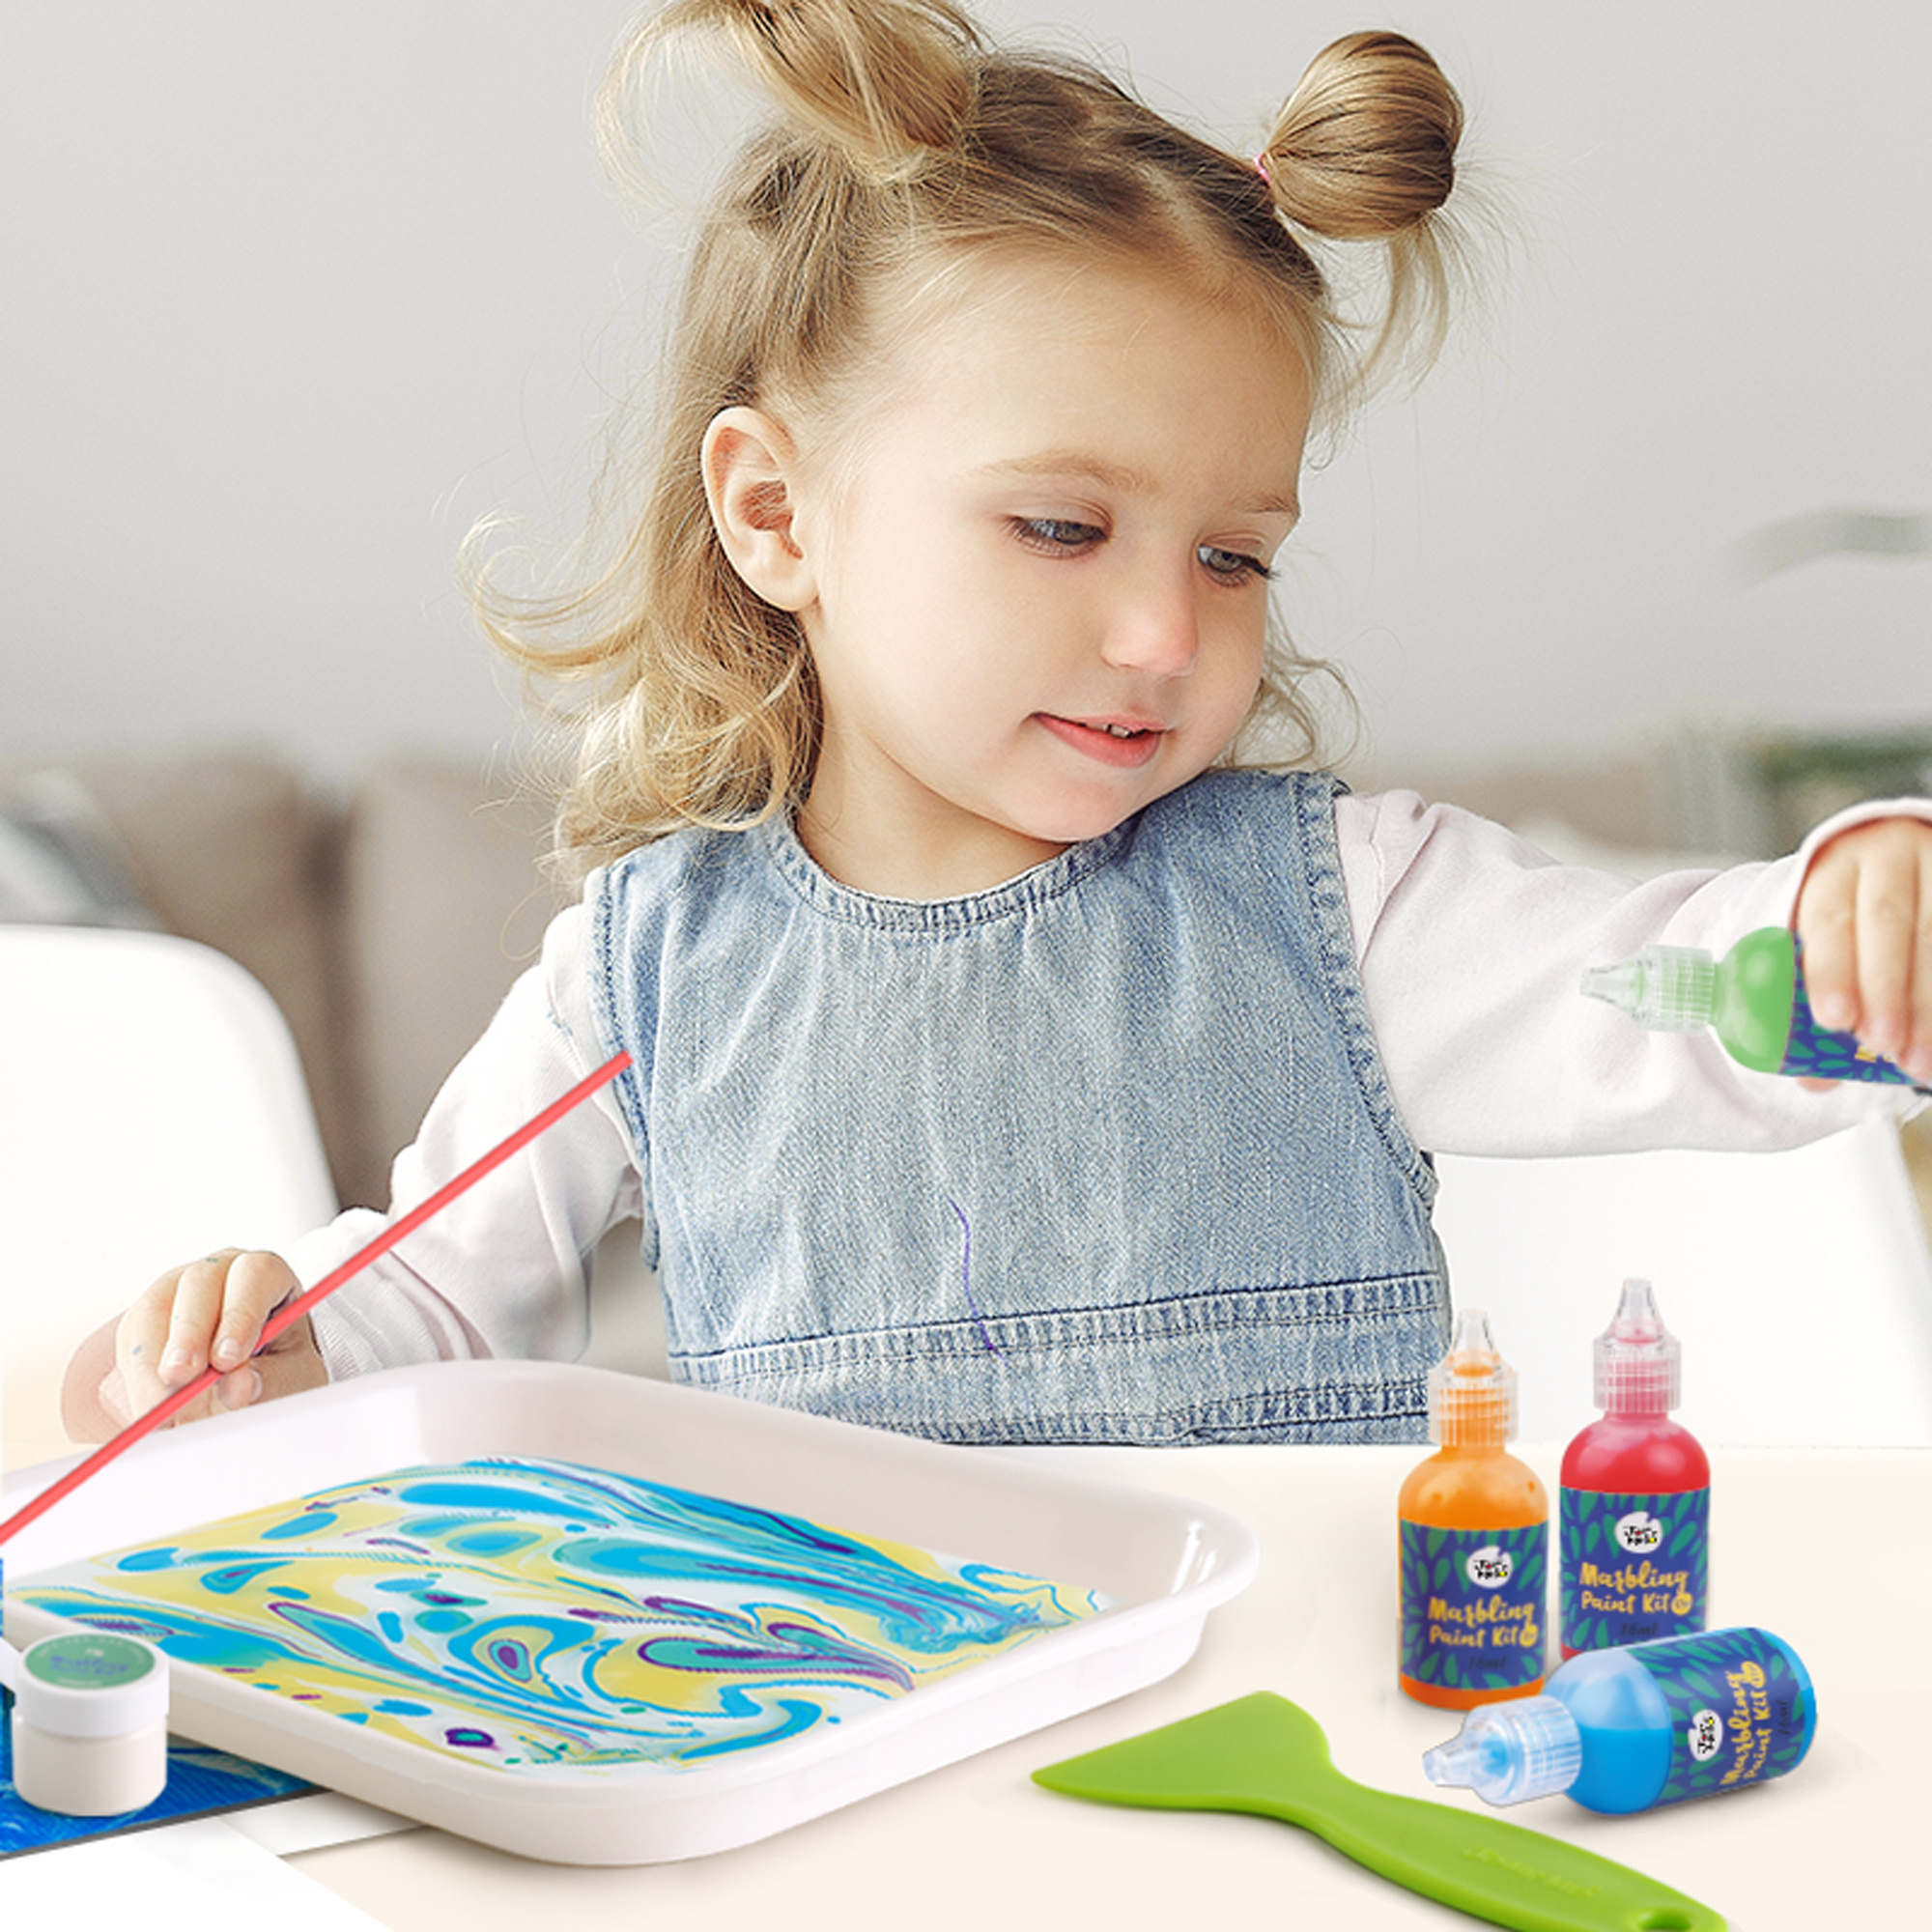 Jar Melo Water Marbling Paint Kit for Kids; 6 Colors, Marble Kit, Non-Toxic, Water Art Paint Set, Art & Crafts Kit for Girls & Boys, Art Kits